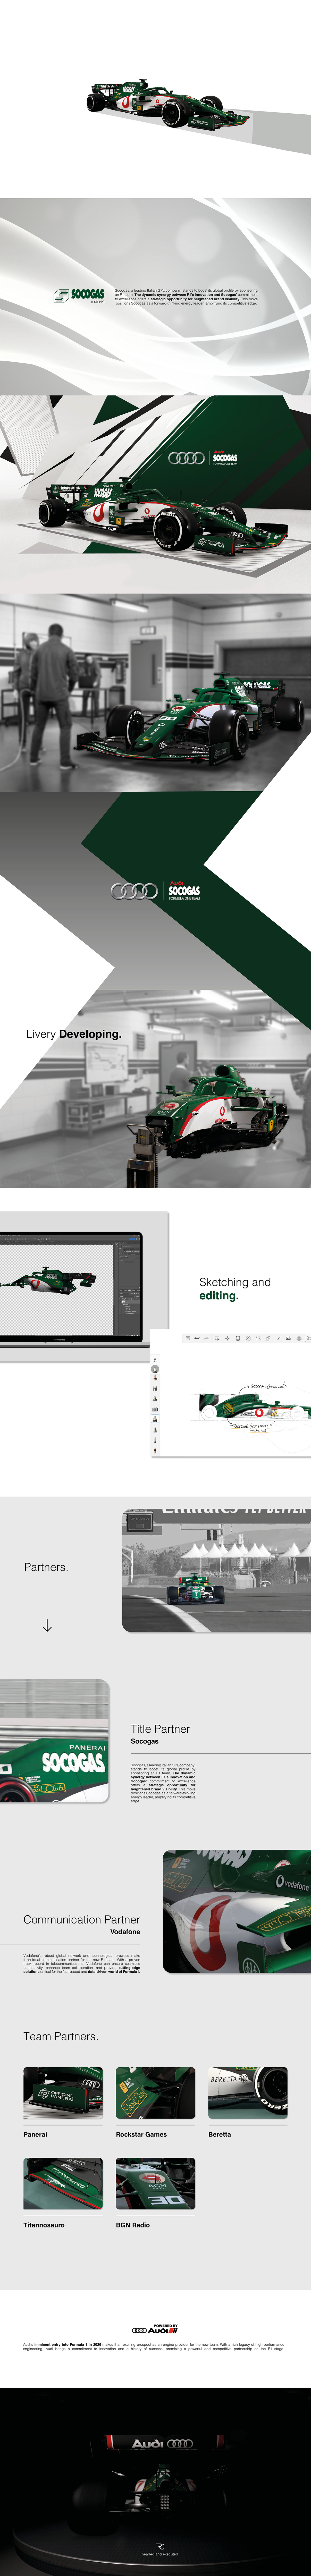 Formula 1 f1 Motorsport Racing Livery automotive   concept design product design  car design